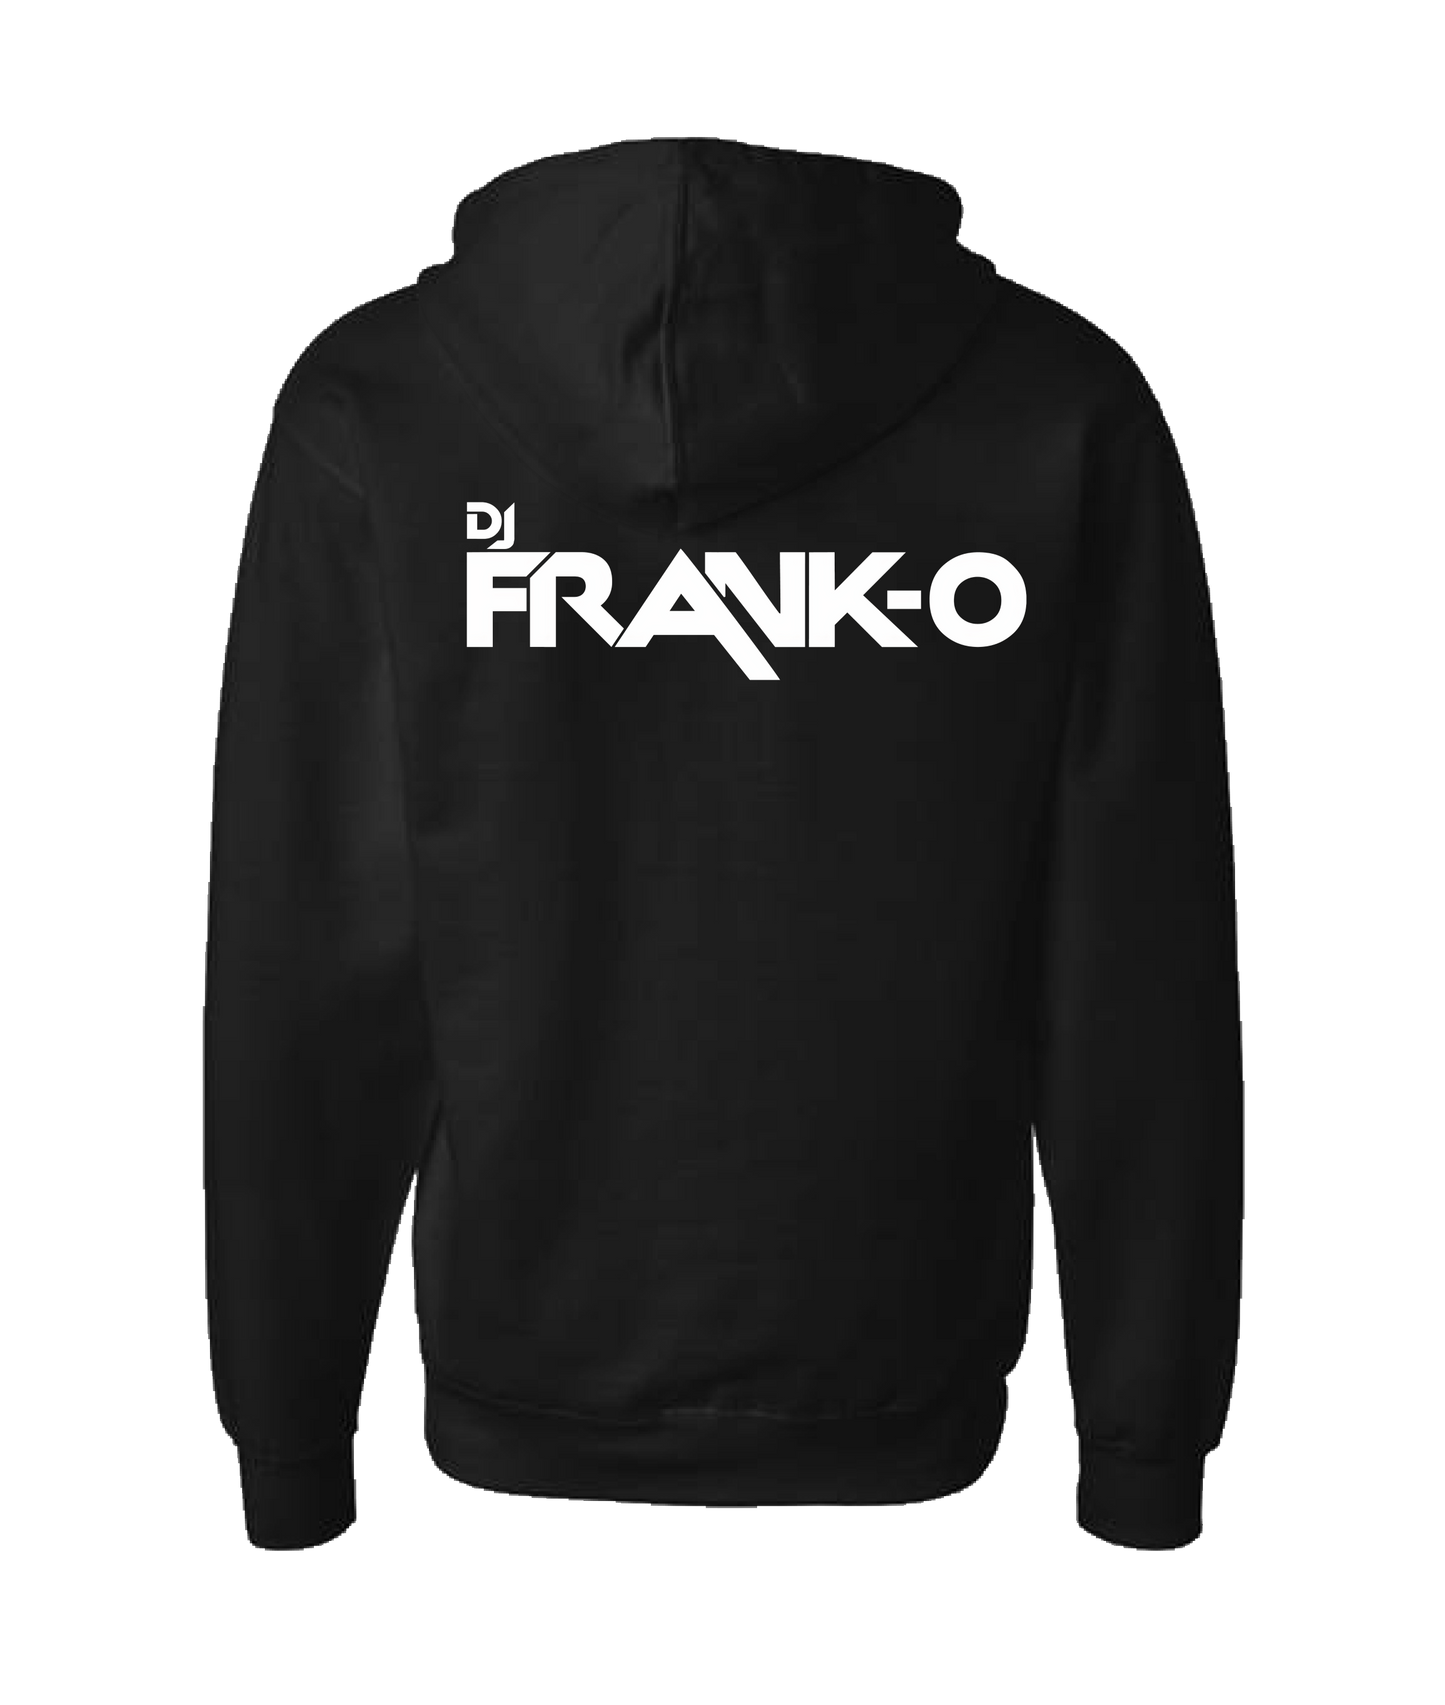 DJ FRANK - O - Logo - Black Zip Up Hoodie